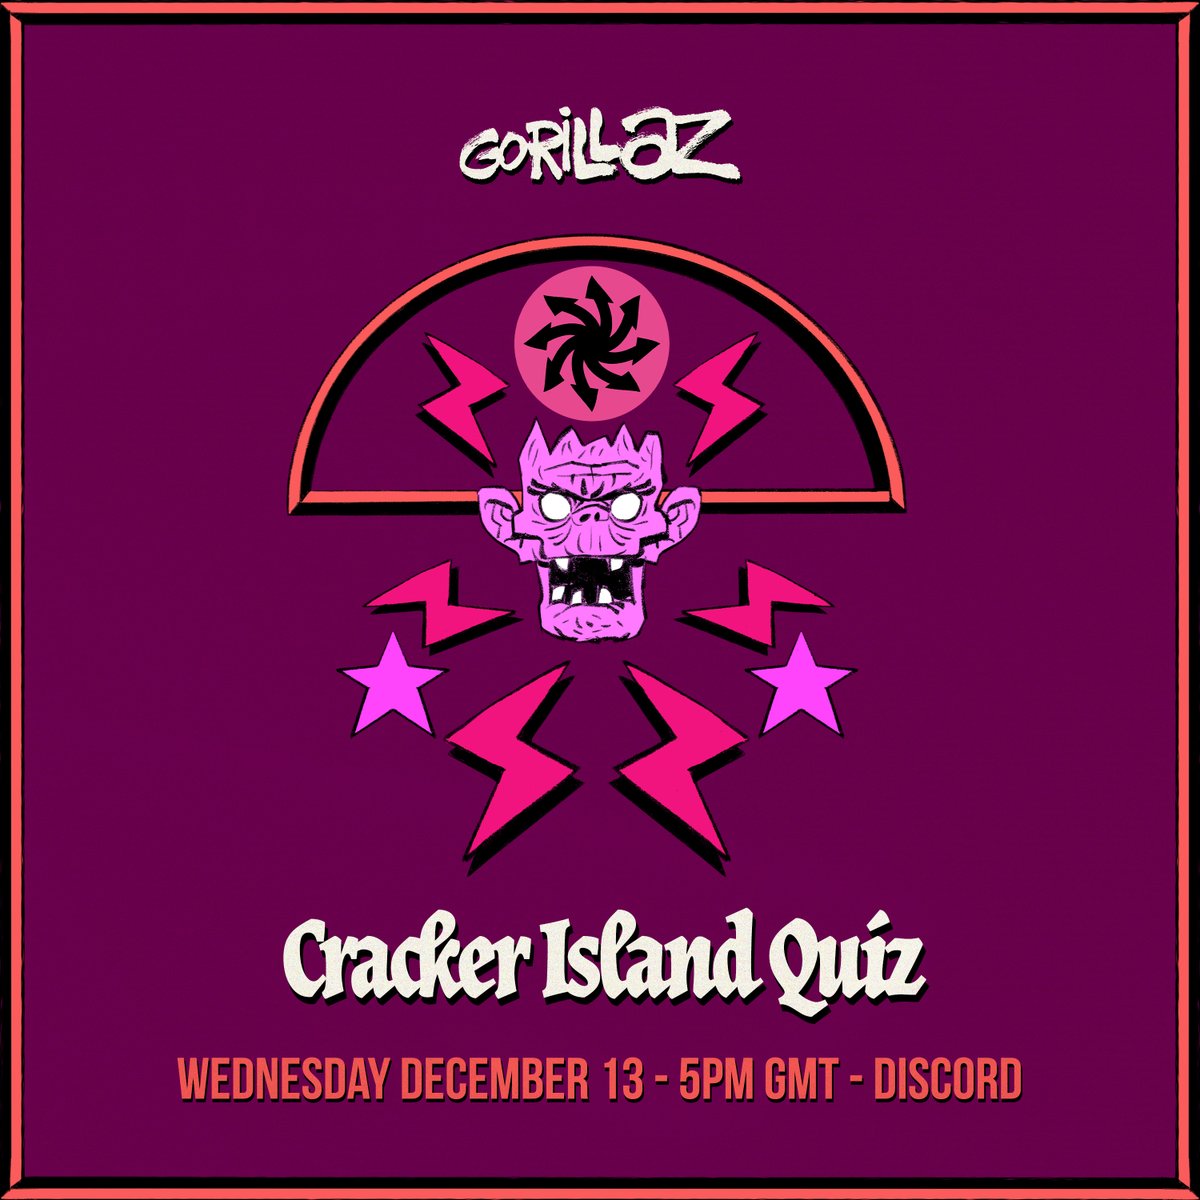 Gorillaz present Cracker Island Quiz ✨ Starting 5pm sharp on Discord, don’t be late! discord.gg/Gorillaz